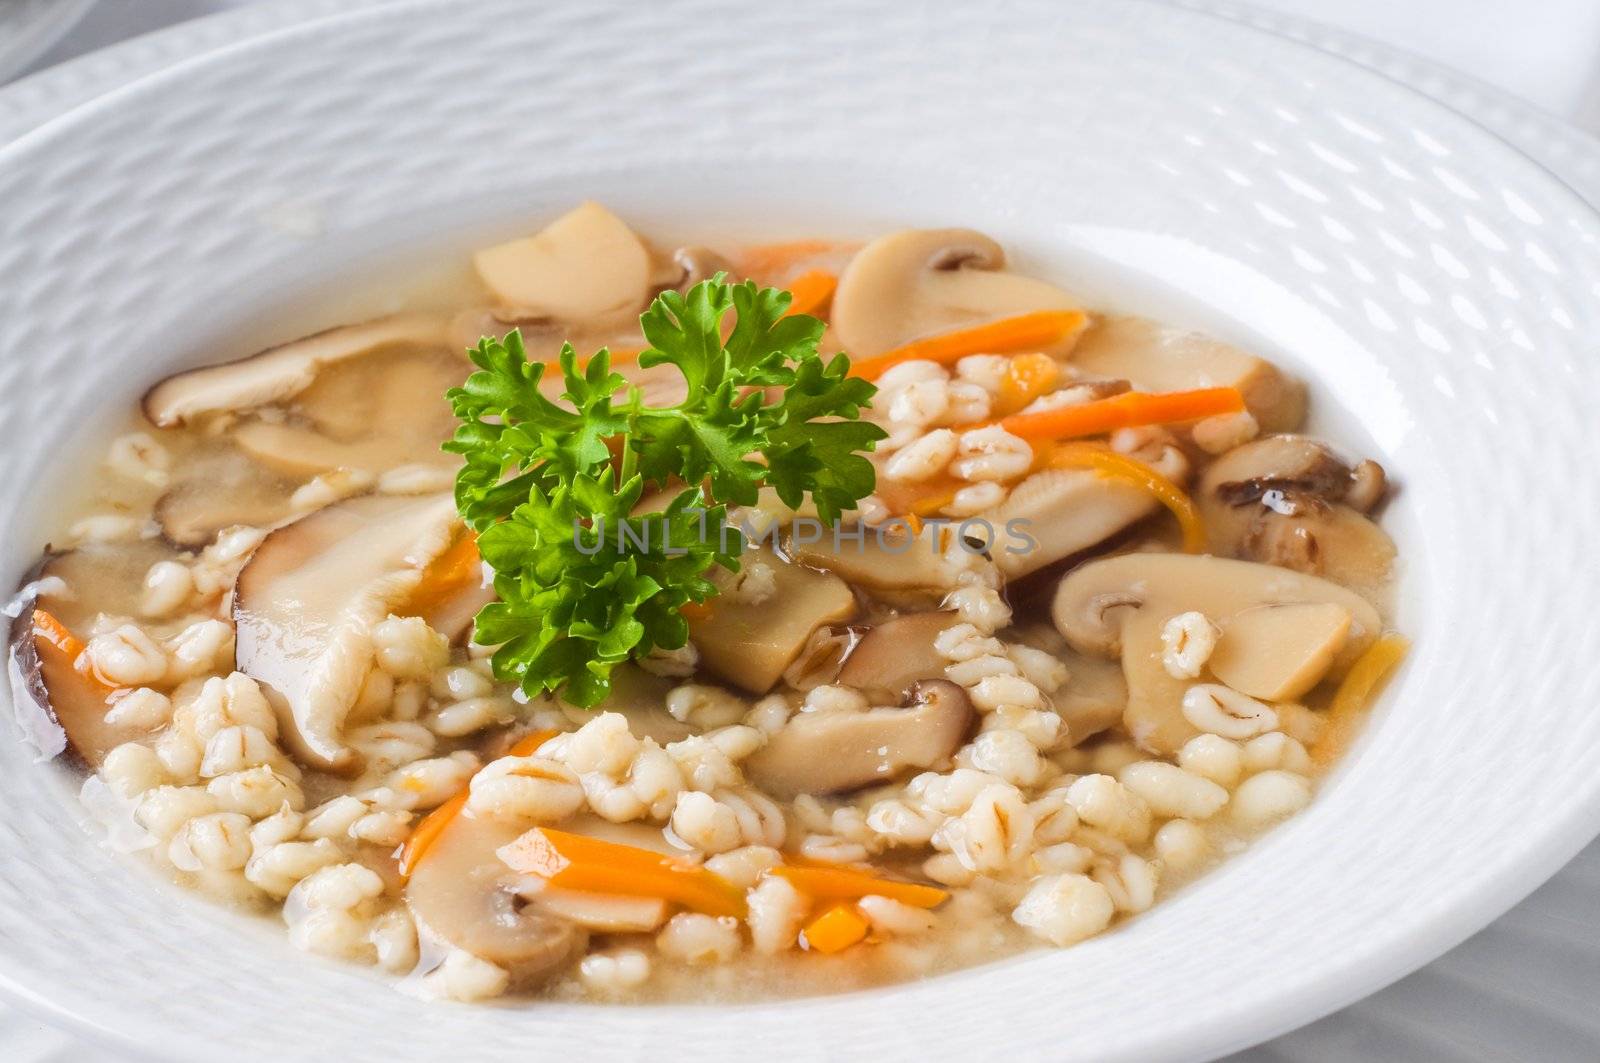 Mushroom Soup by billberryphotography